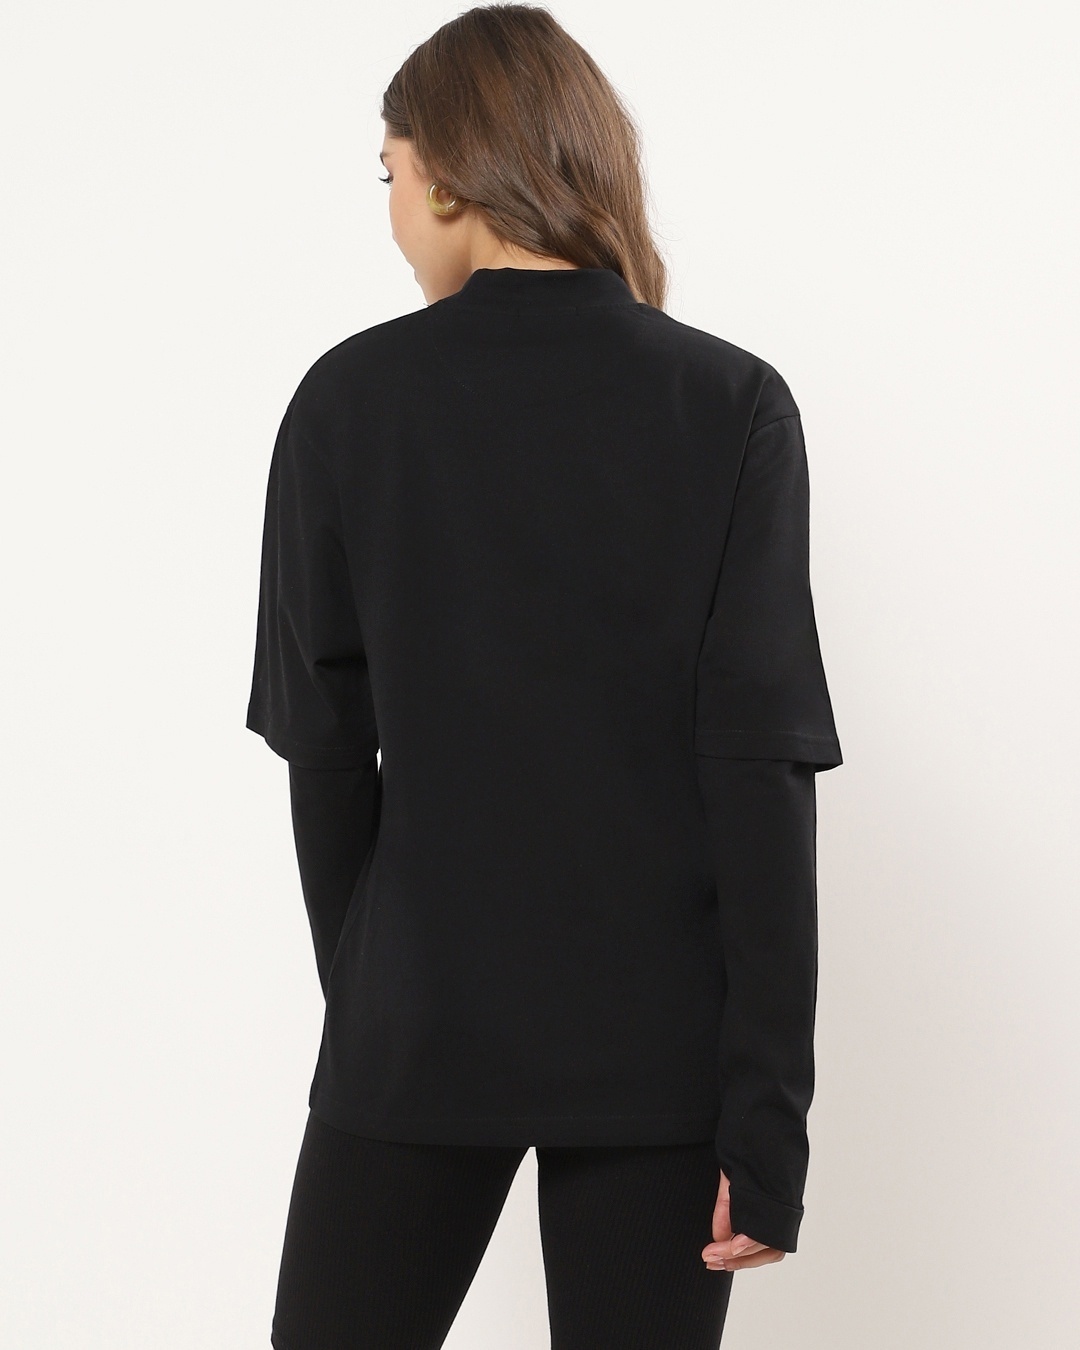 Shop Women's Black Doctor Sleeve T-shirt-Design